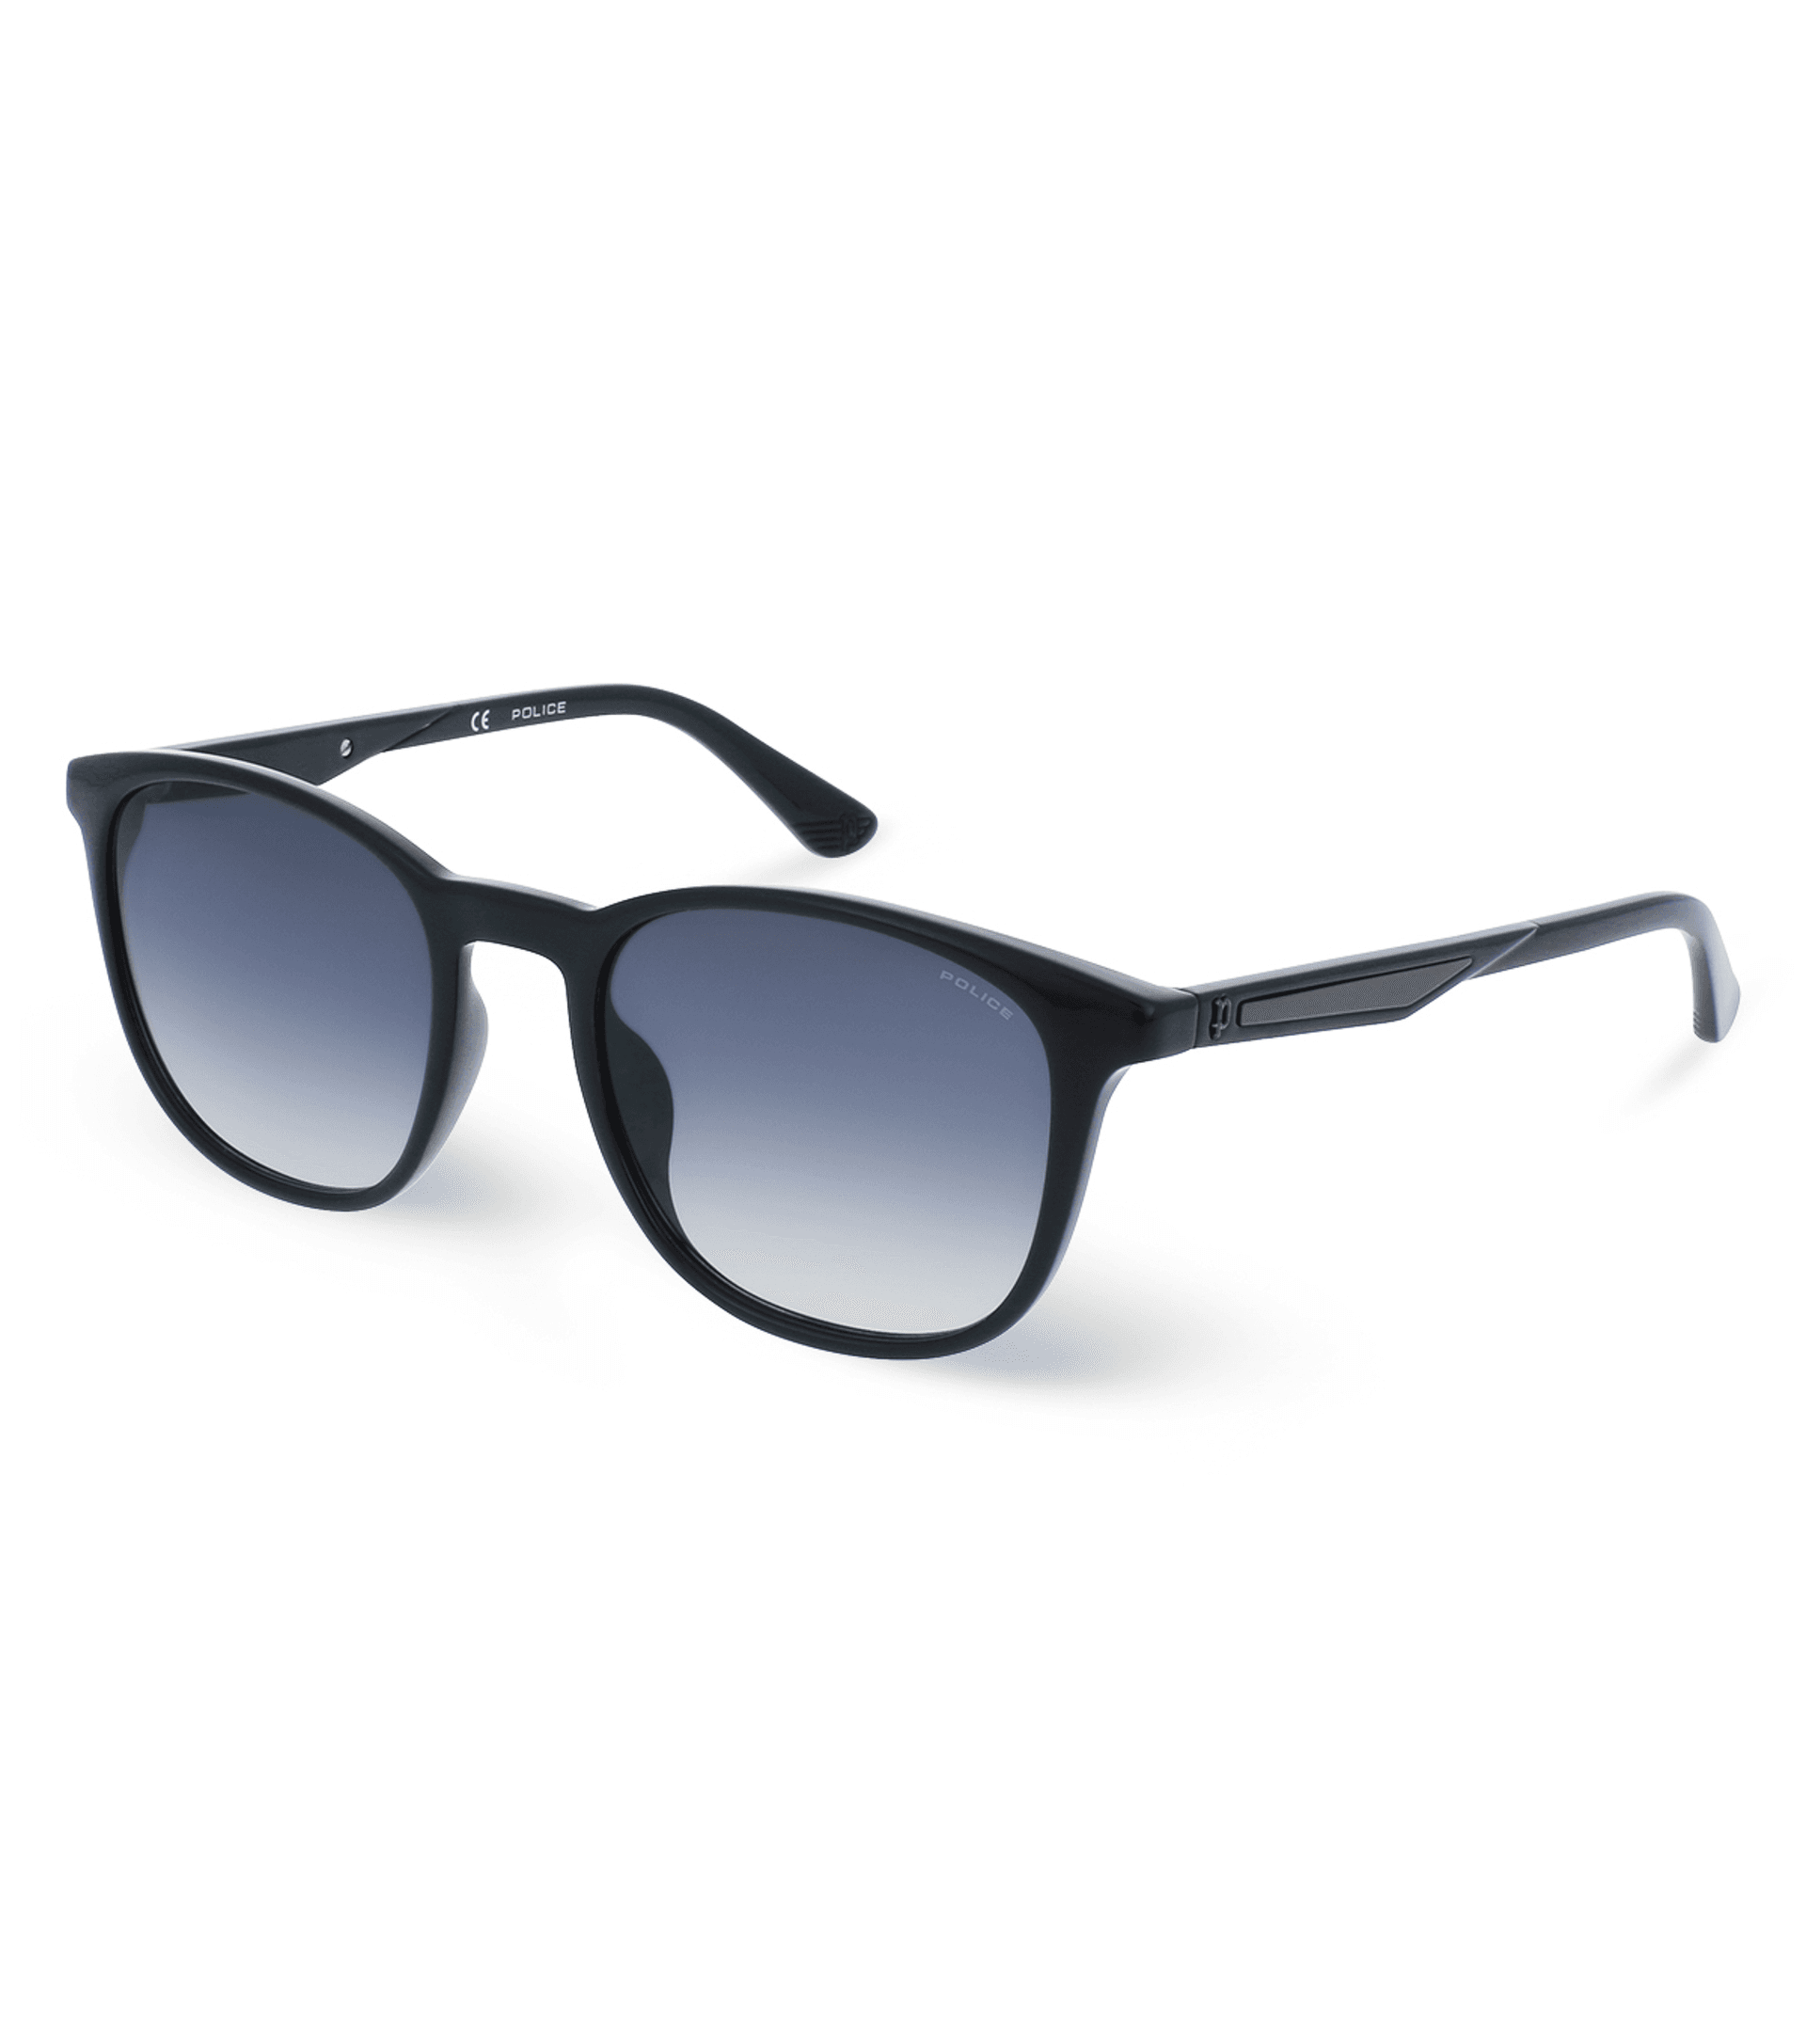 Police sunglasses - Groove 4 Man Sunglasses Police SPLF18 Blue, Blue